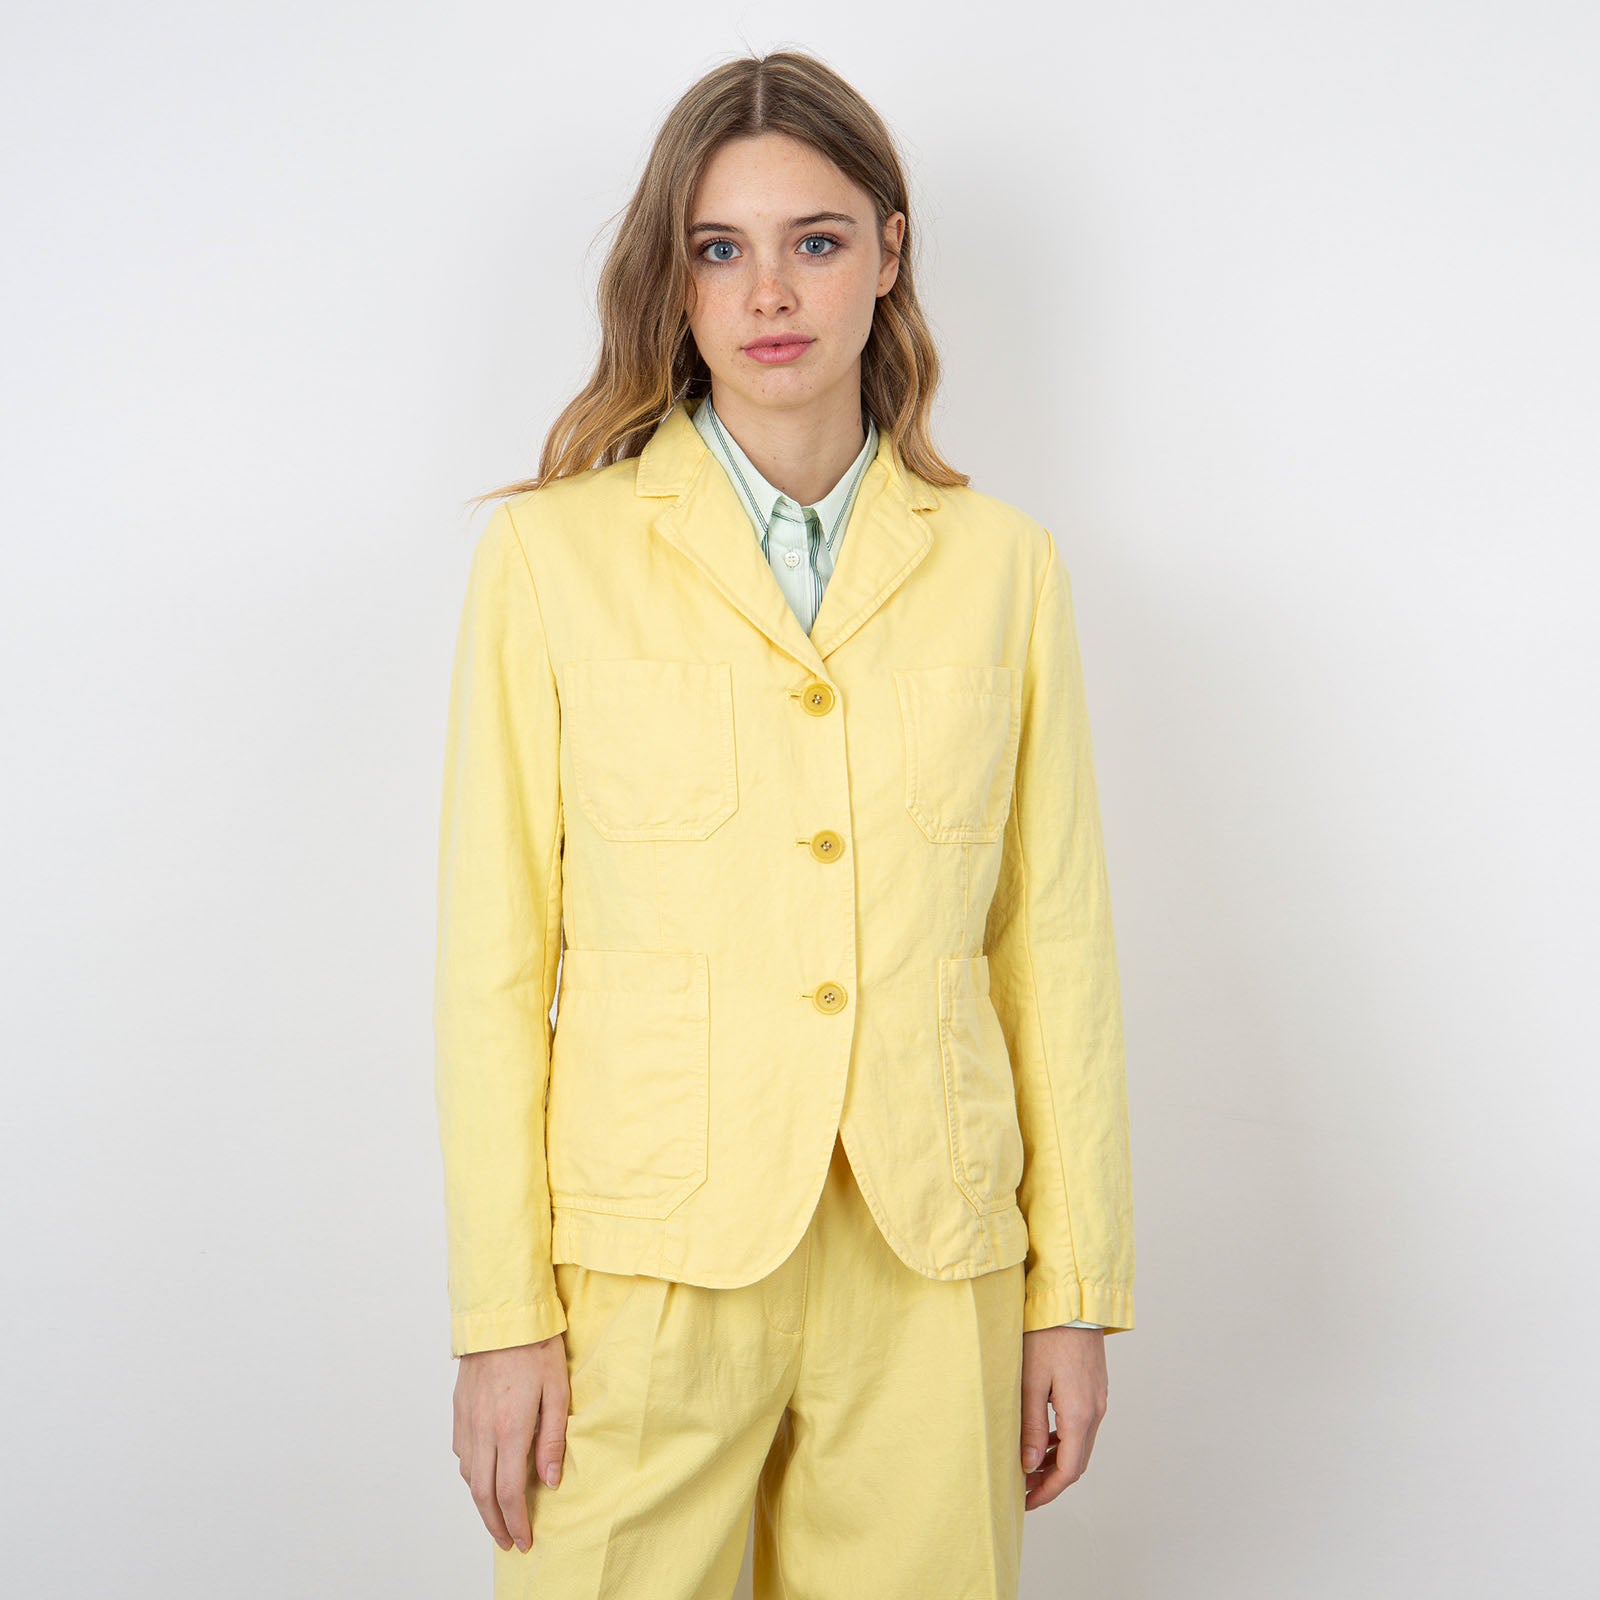 Aspesi Cotton/Linen Yellow Jacket 0930 G20885155 - 8